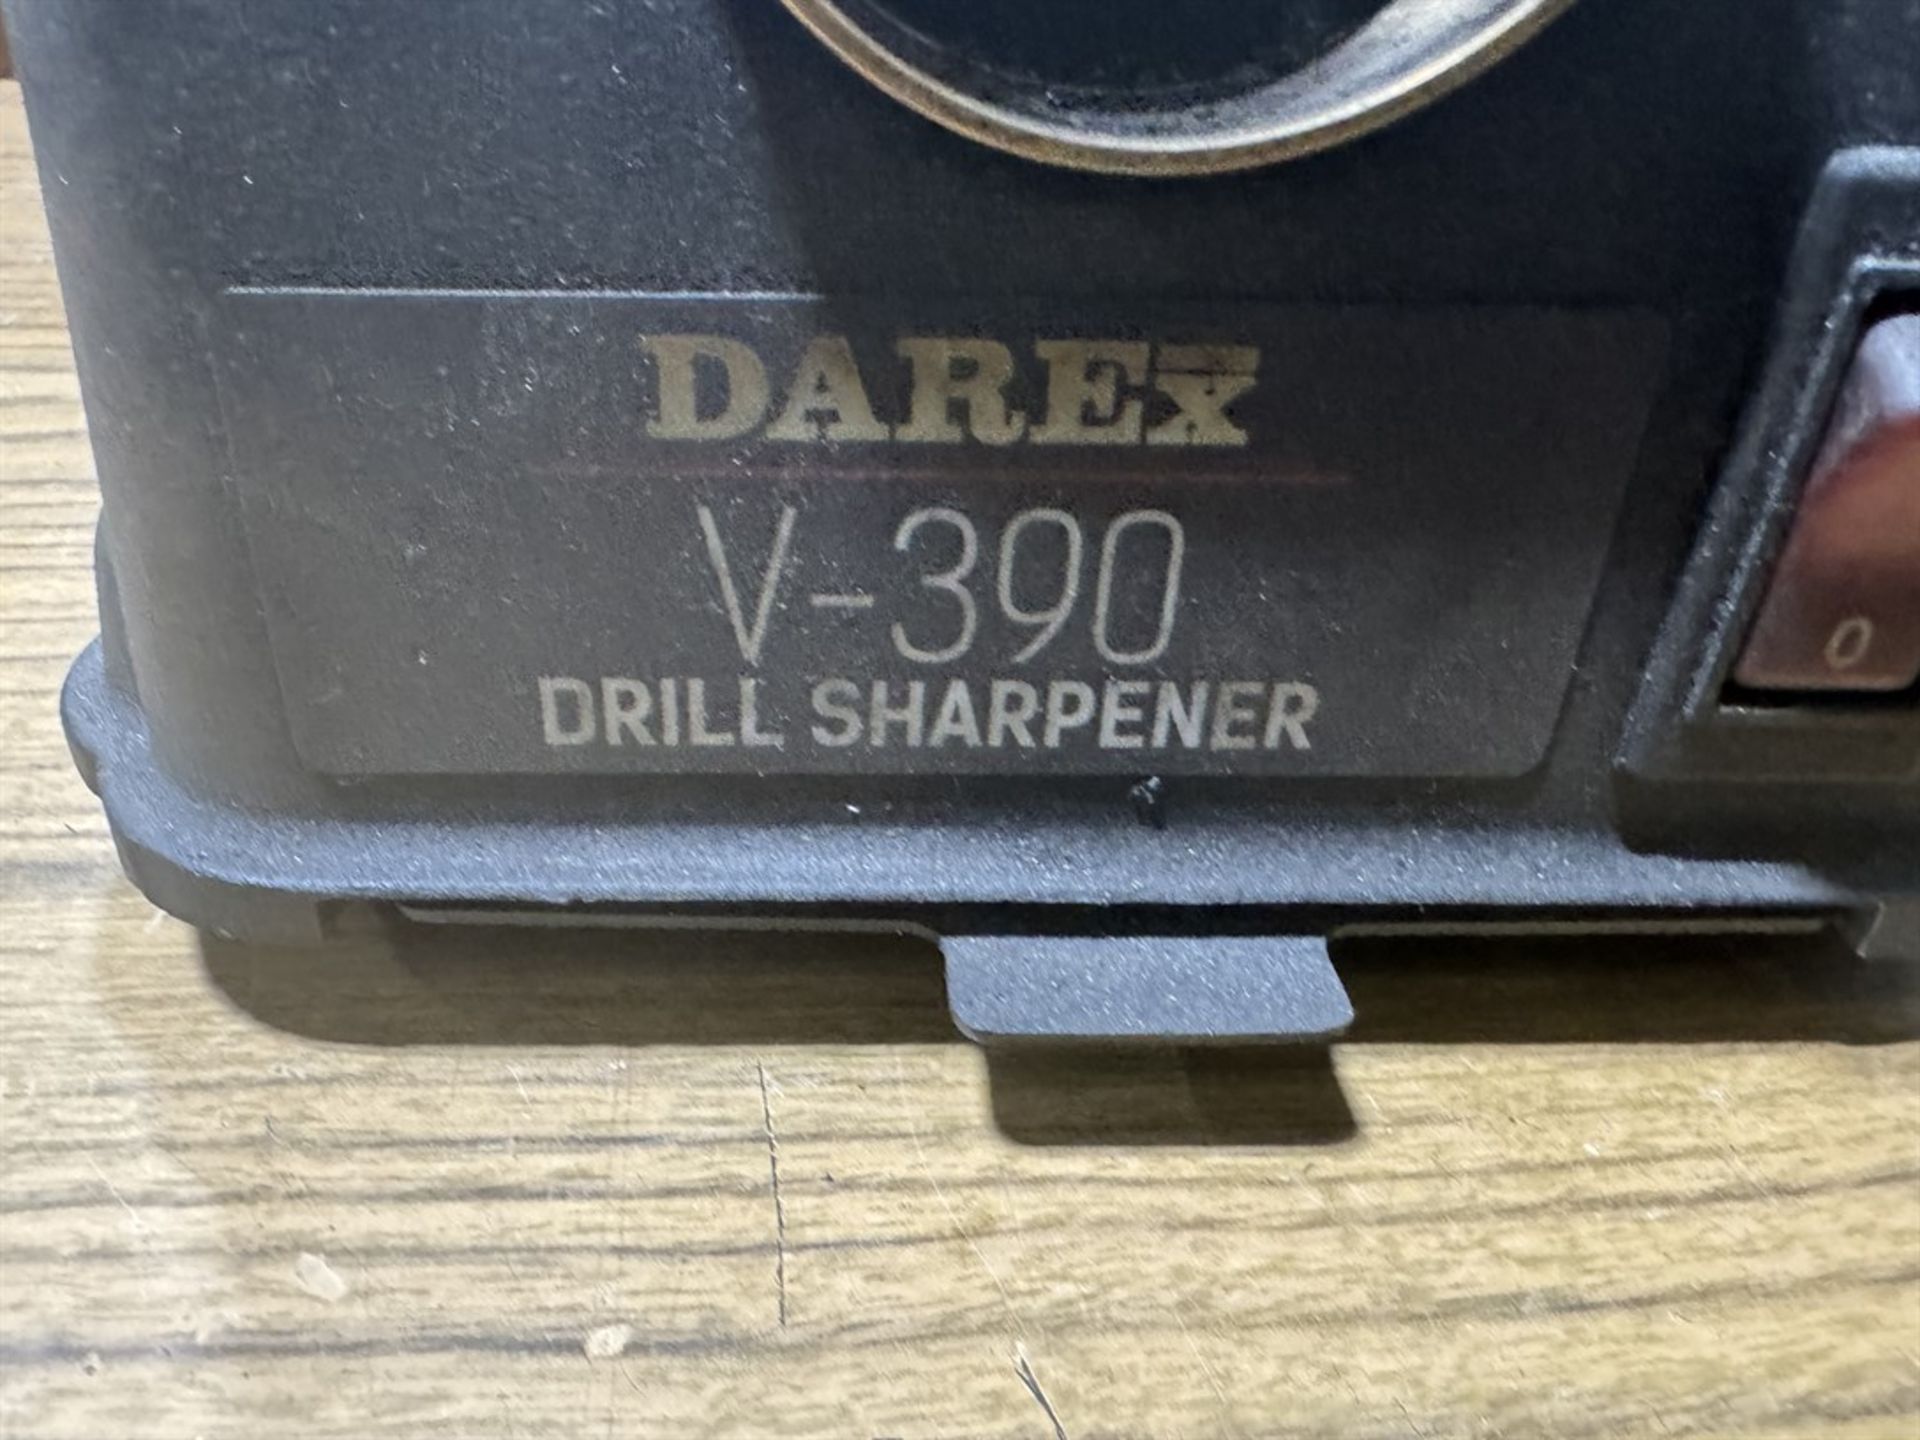 DAREX V-390 Drill Sharpener, s/n 39003199 - Image 3 of 4